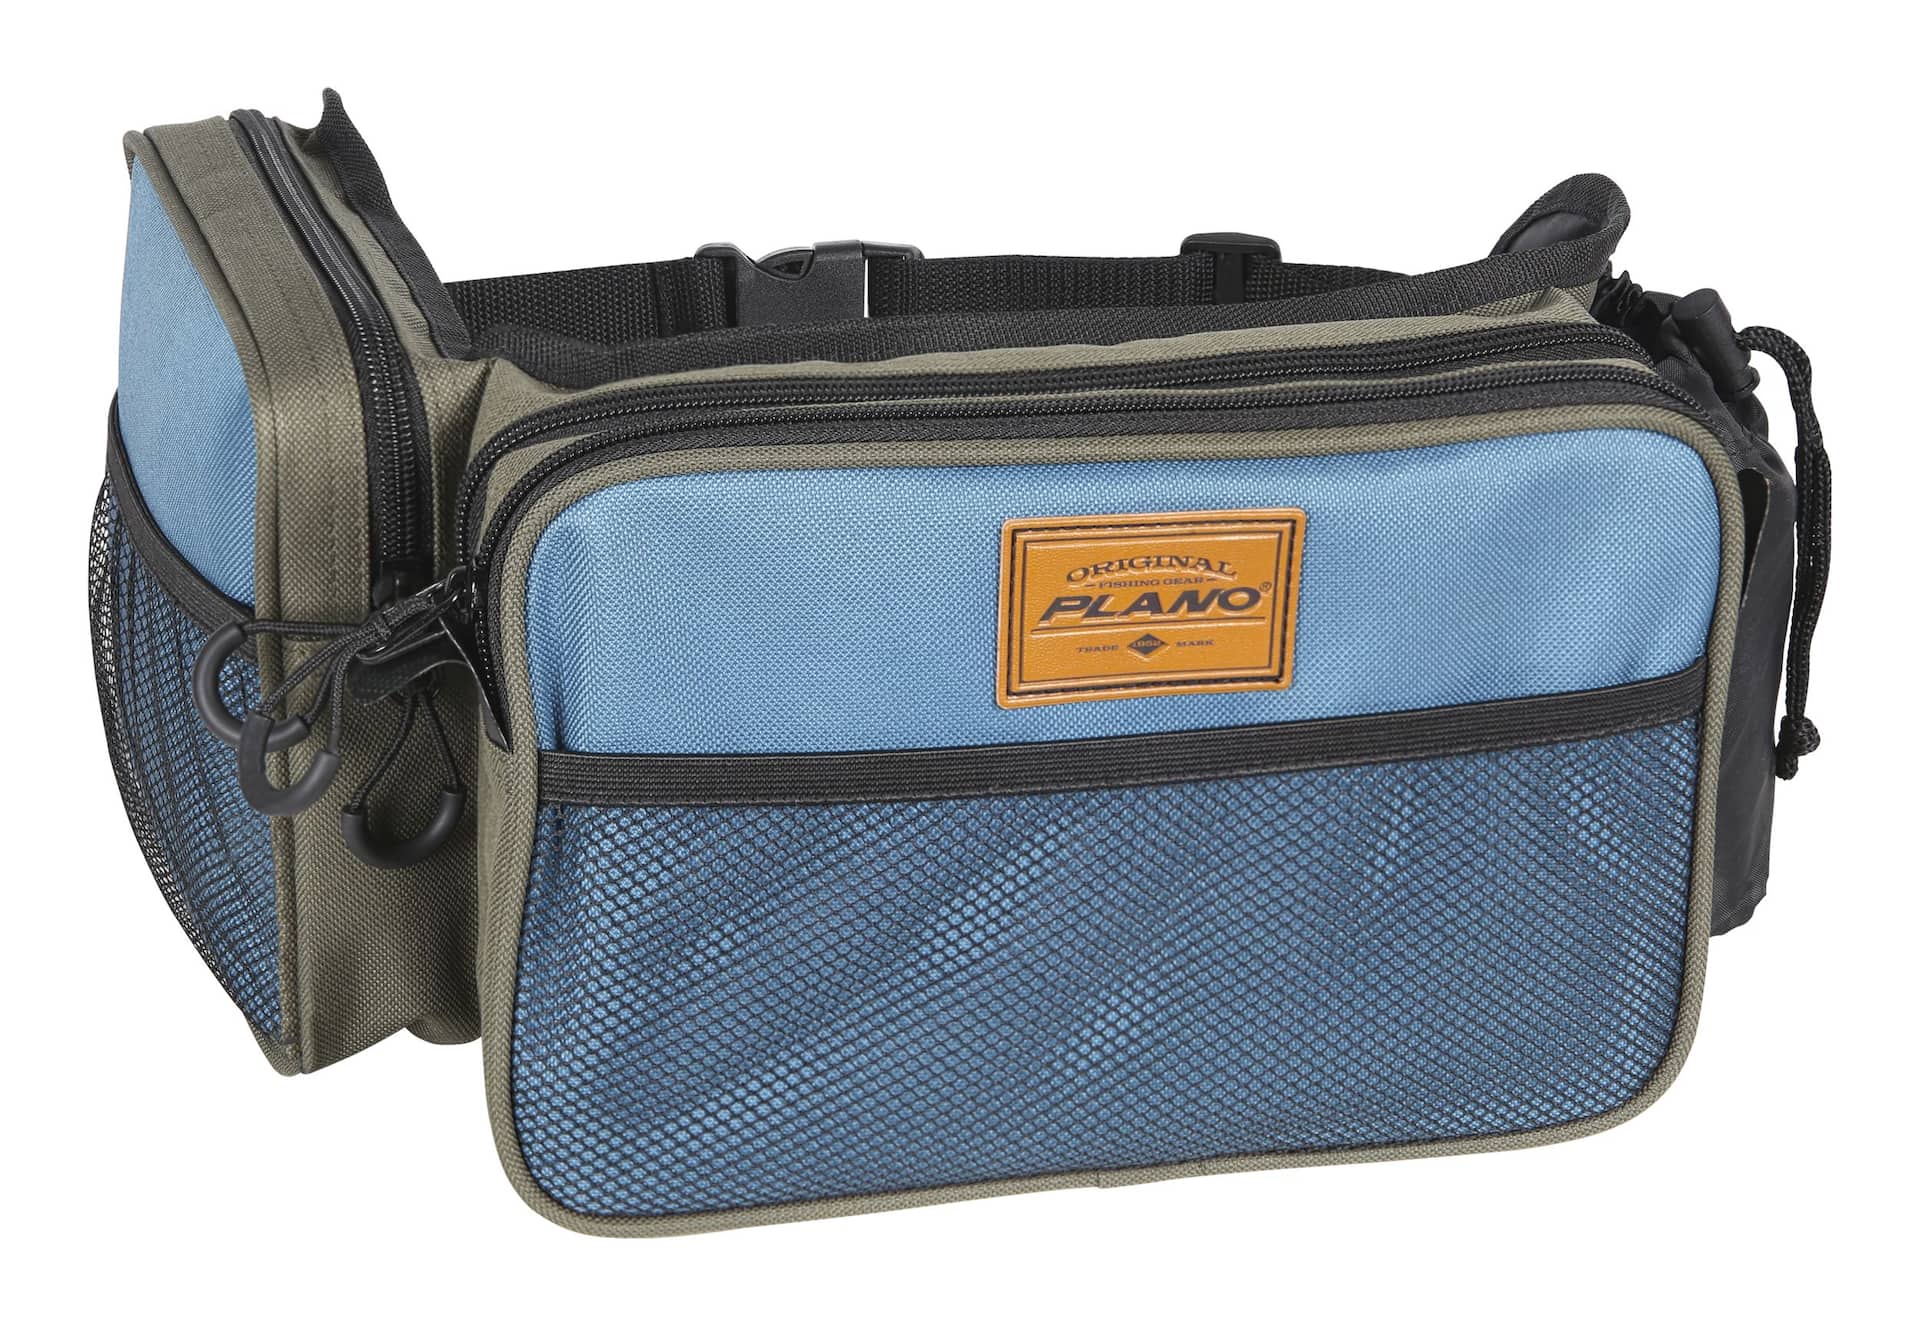 Plano Medium 3600 Series Soft Sider Tackle Bag